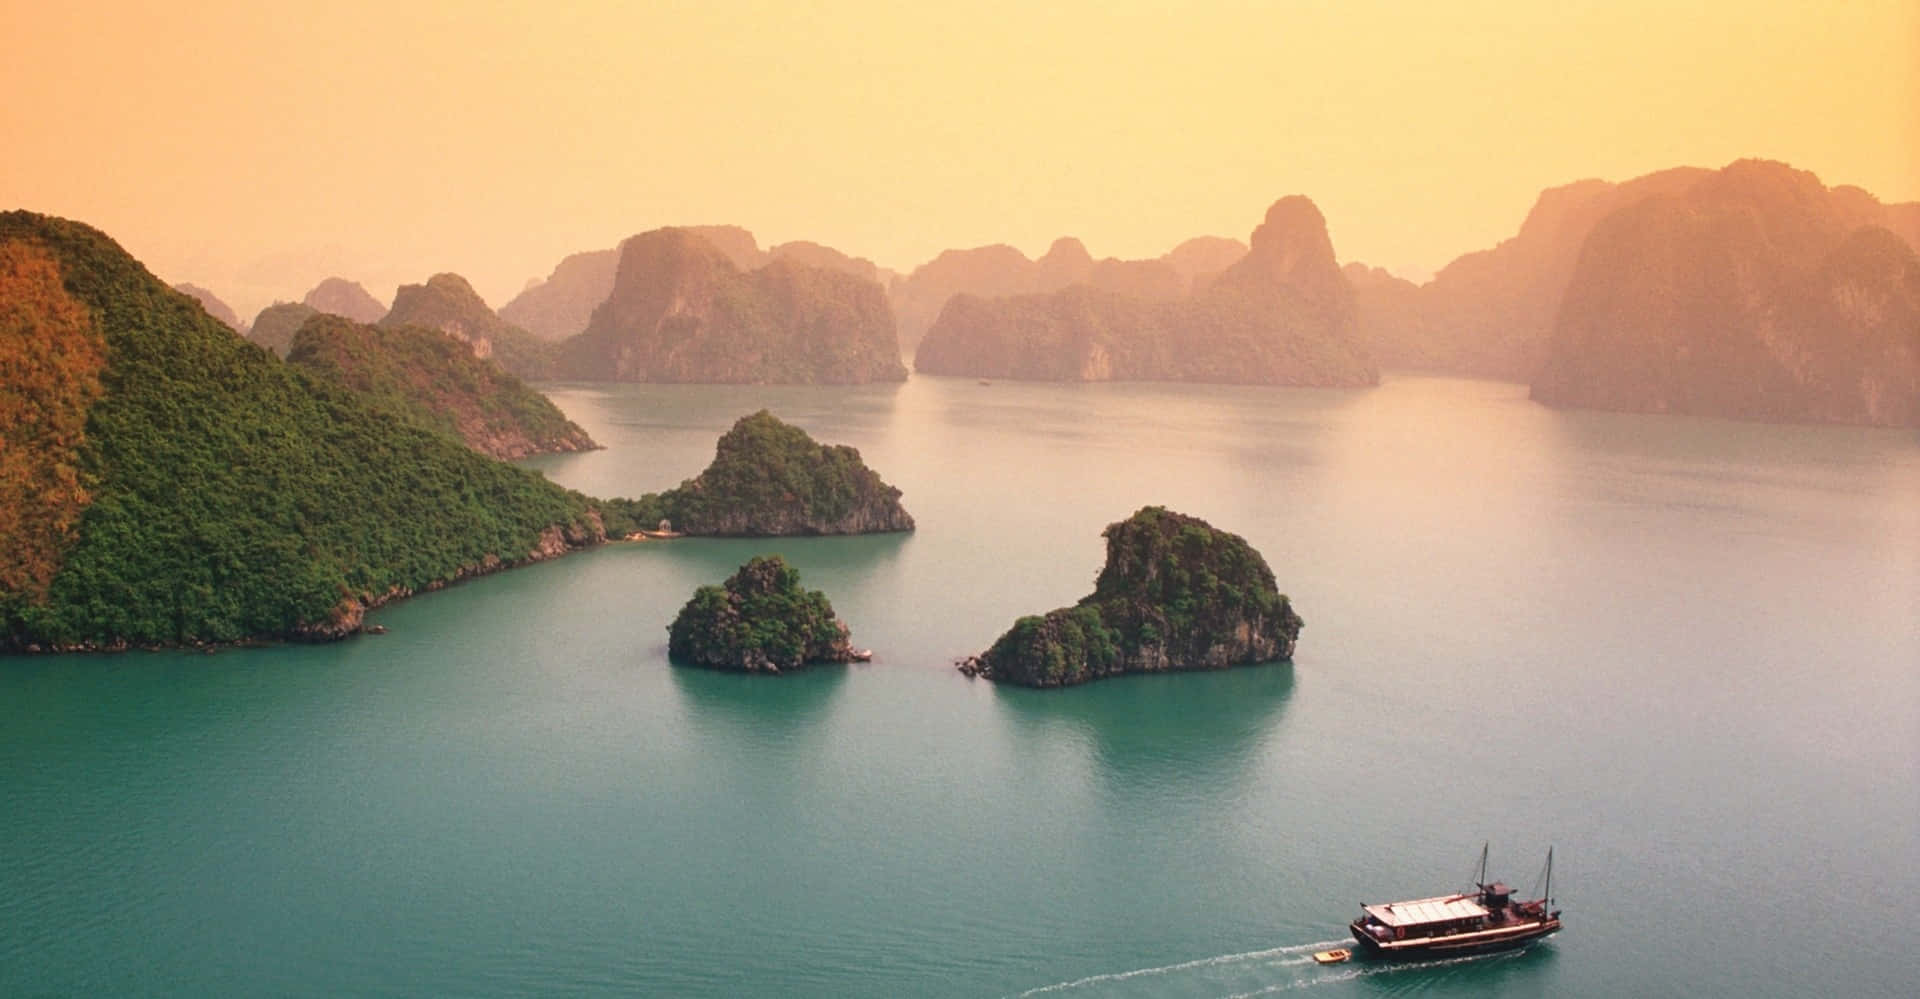 The mystical beauty of Vietnam